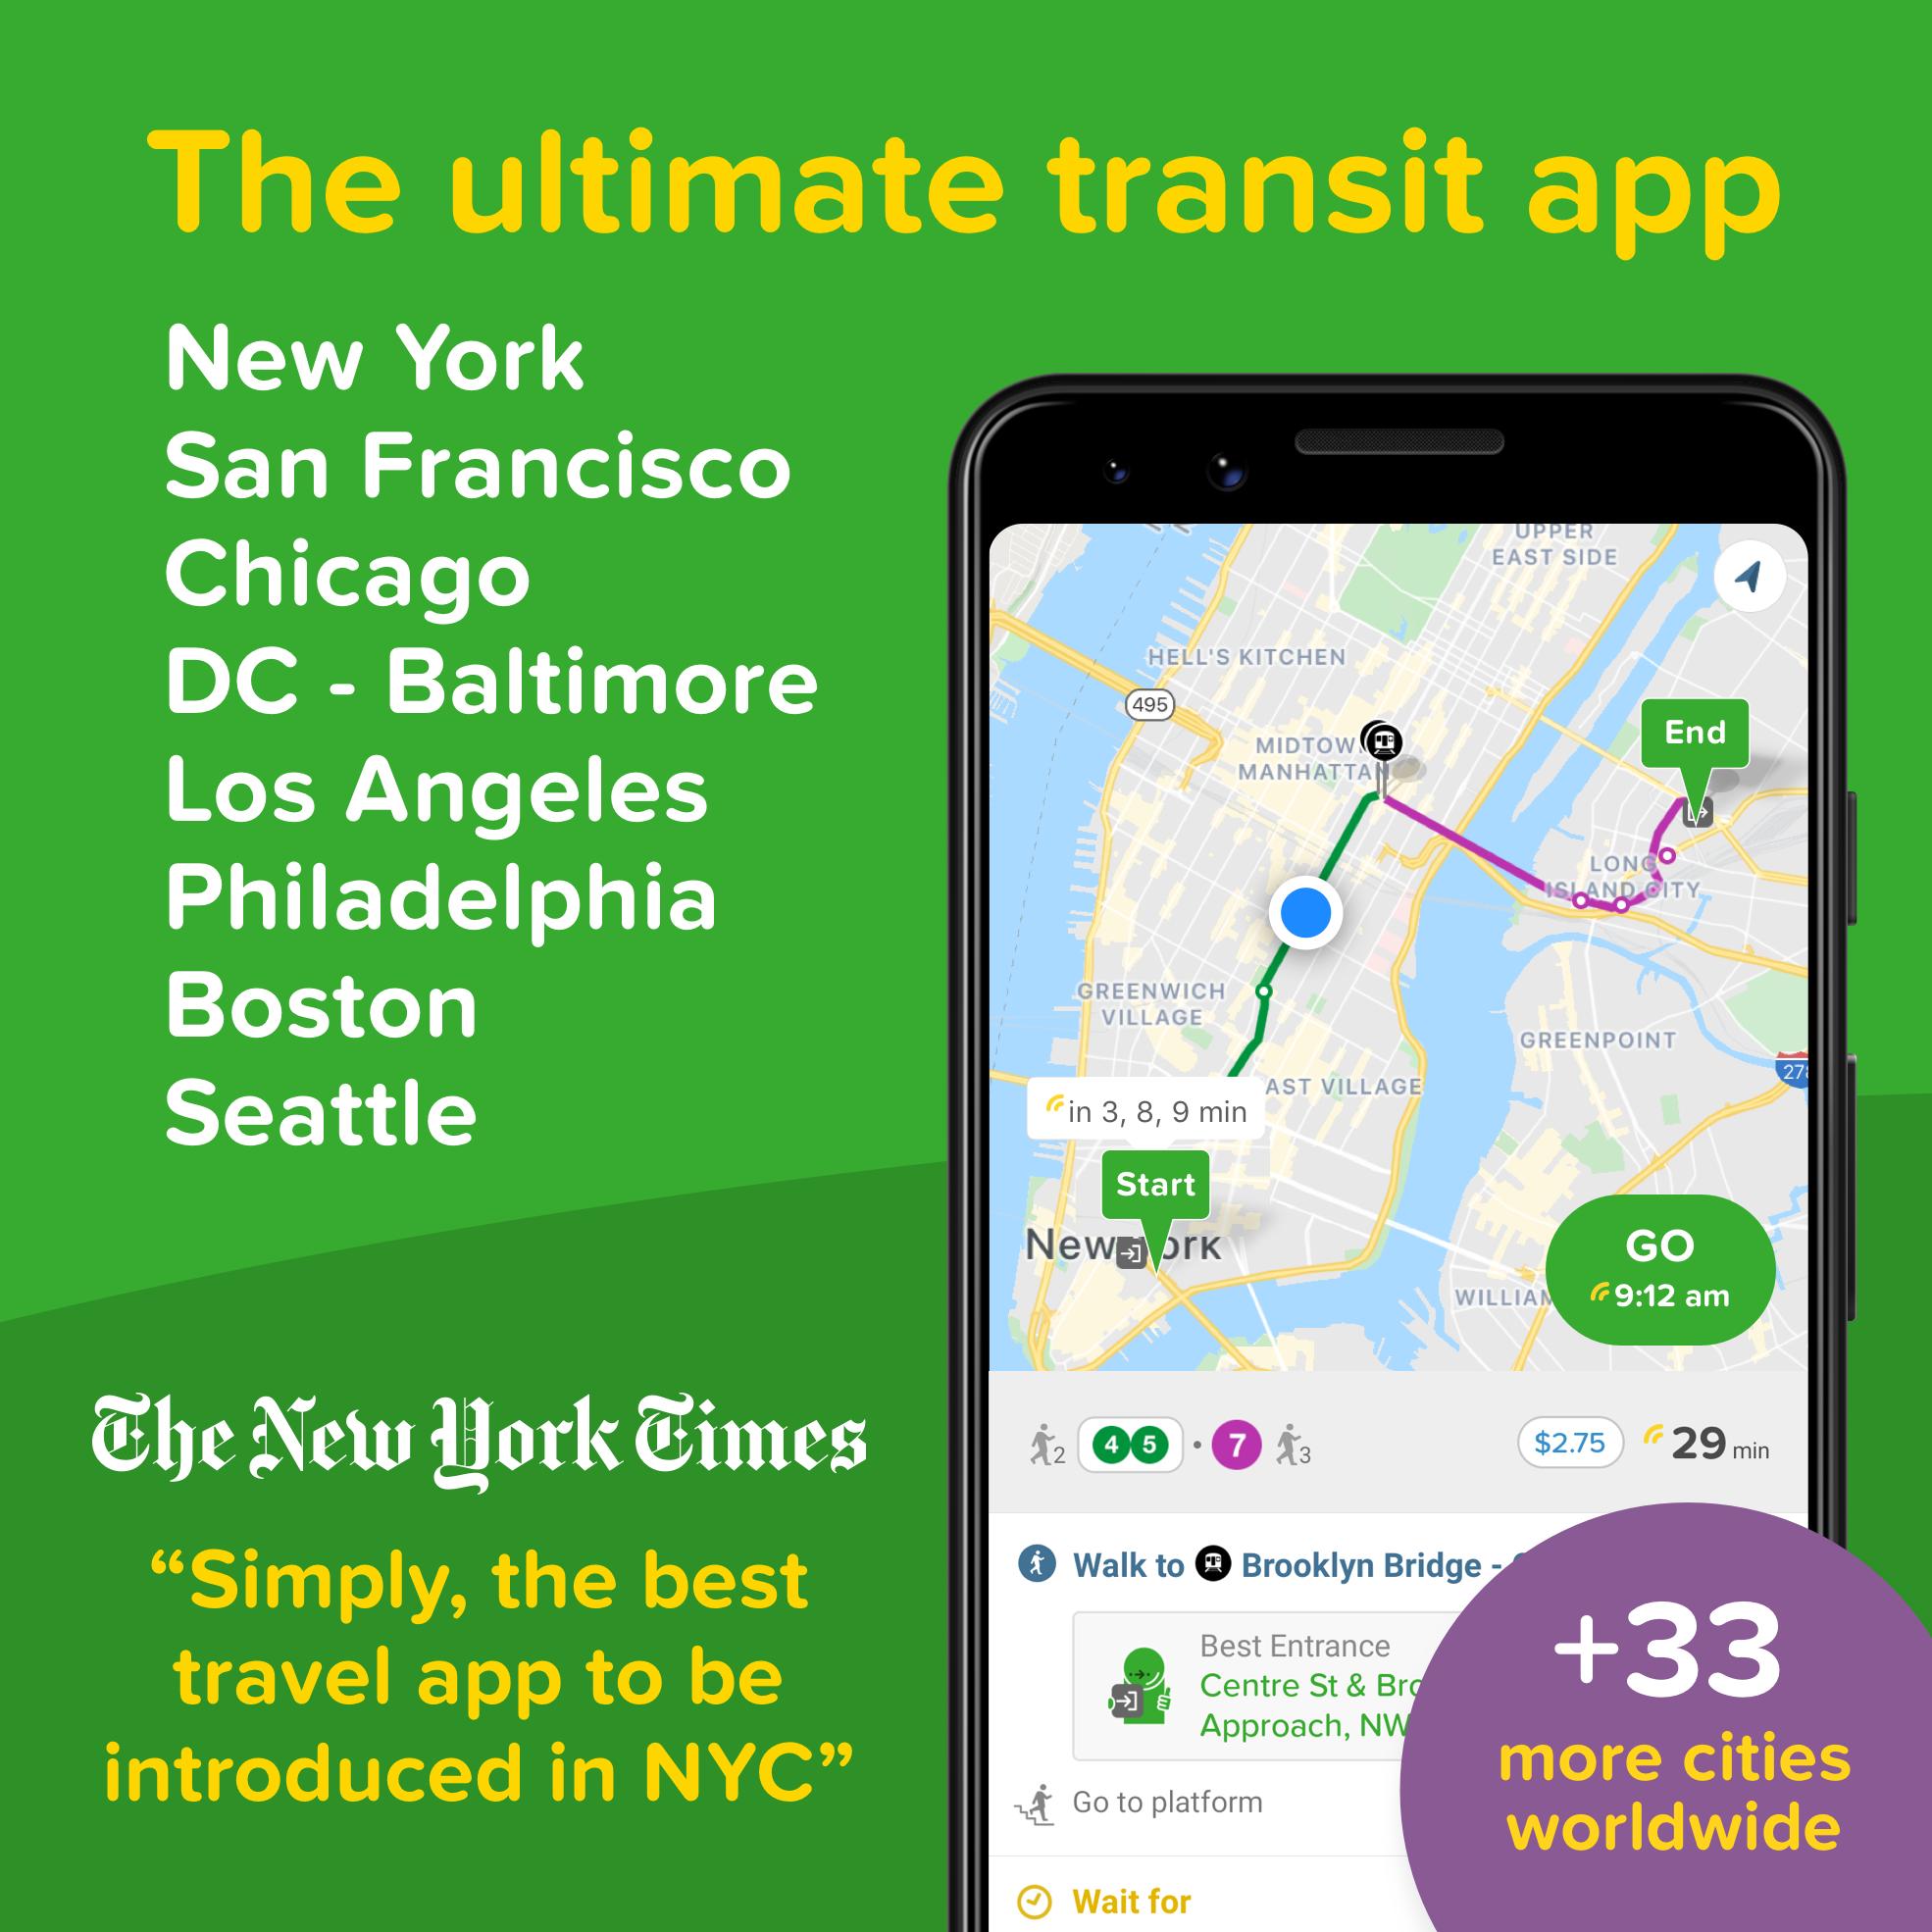 Citymapper the ultimate urban transit app 9.6.1 Screenshot 1